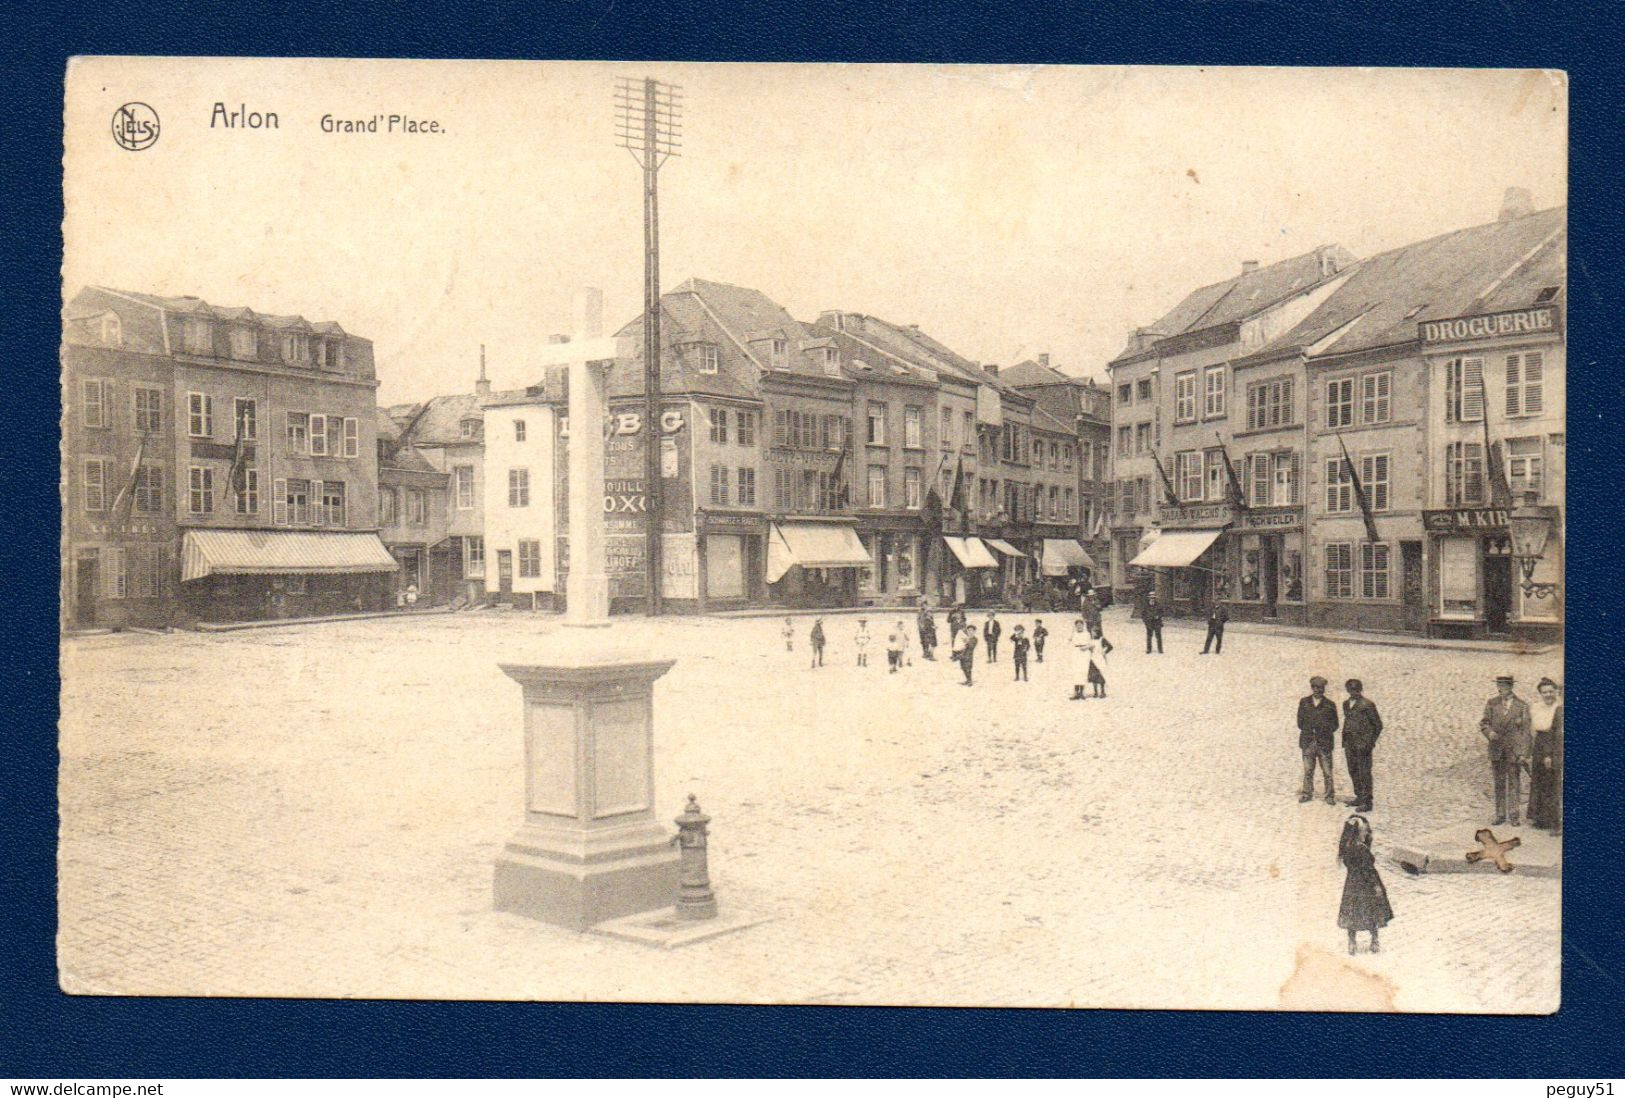 Arlon.  Grand' Place. Schwartz-Ravet. Goetz-Nassogne. Bazar Walens S. Fischweiler. Droguerie. 1930 - Aarlen